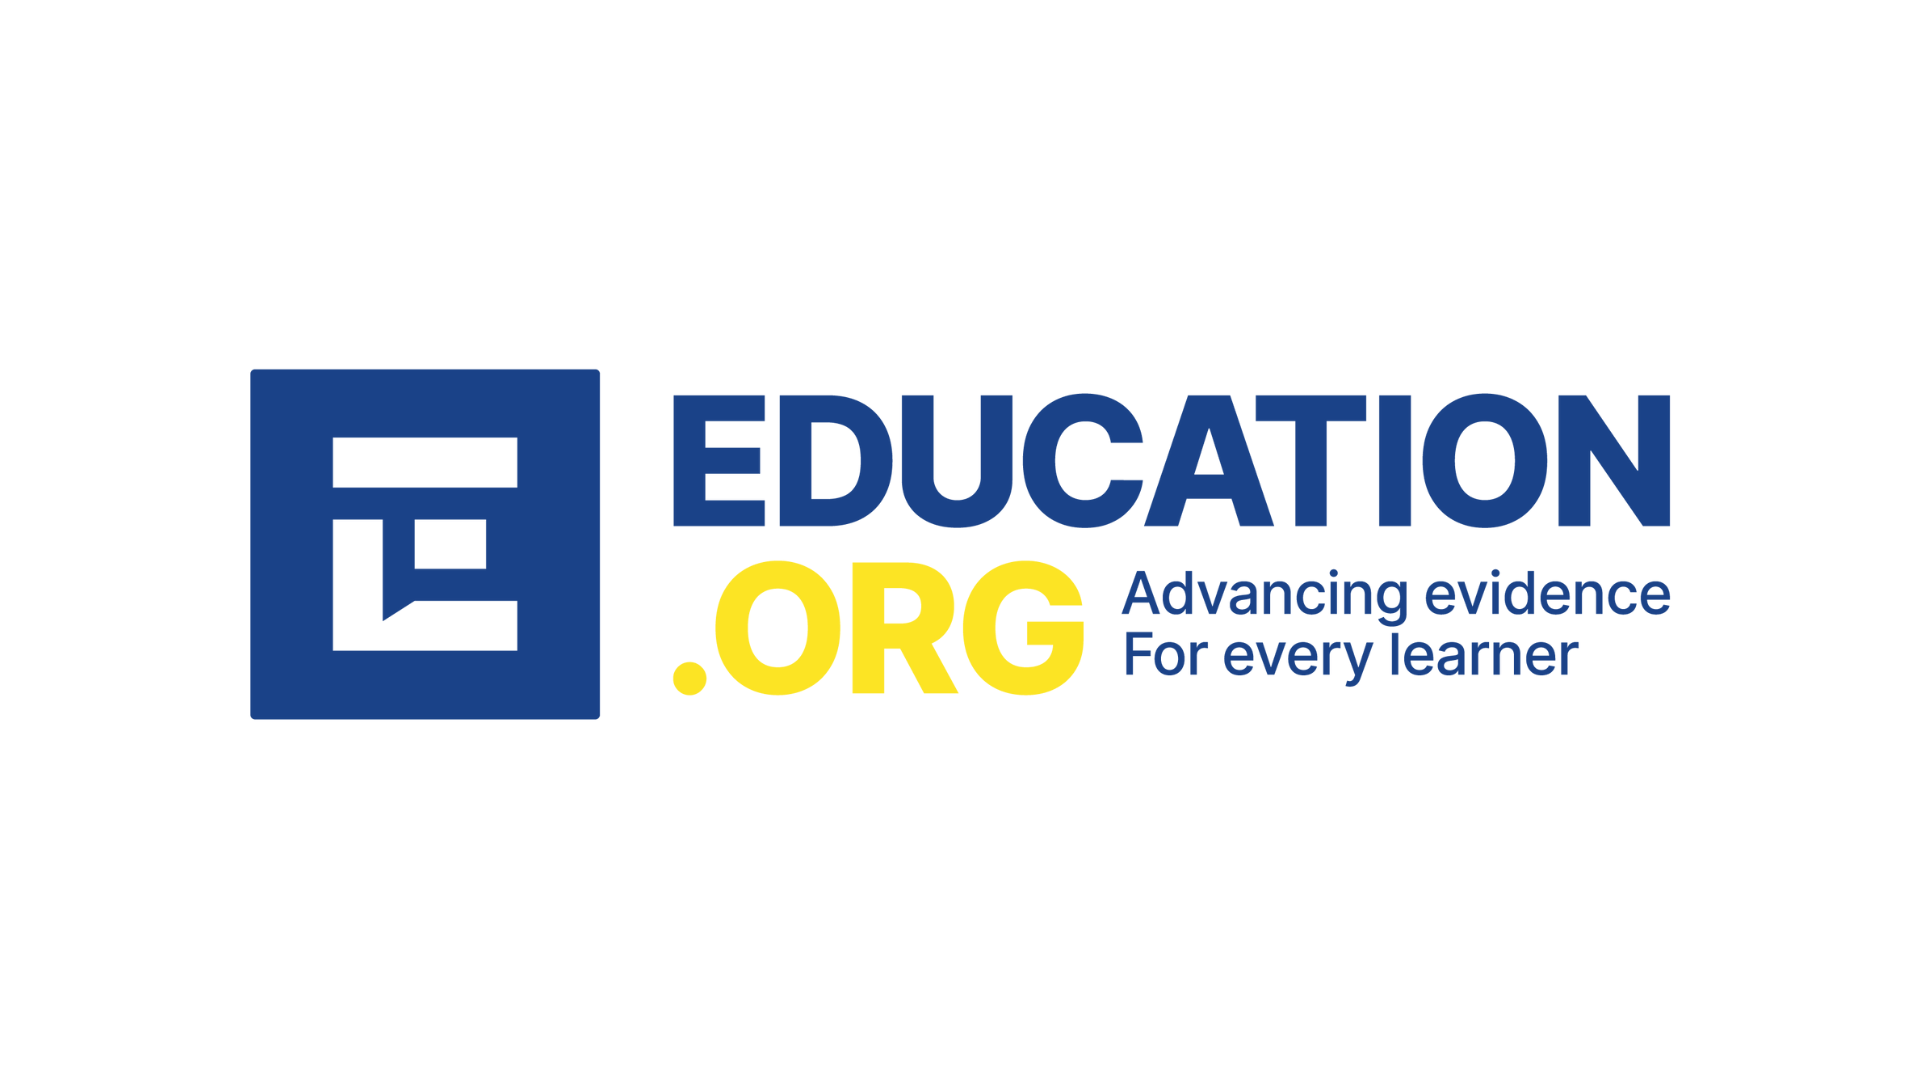 Education.org logo